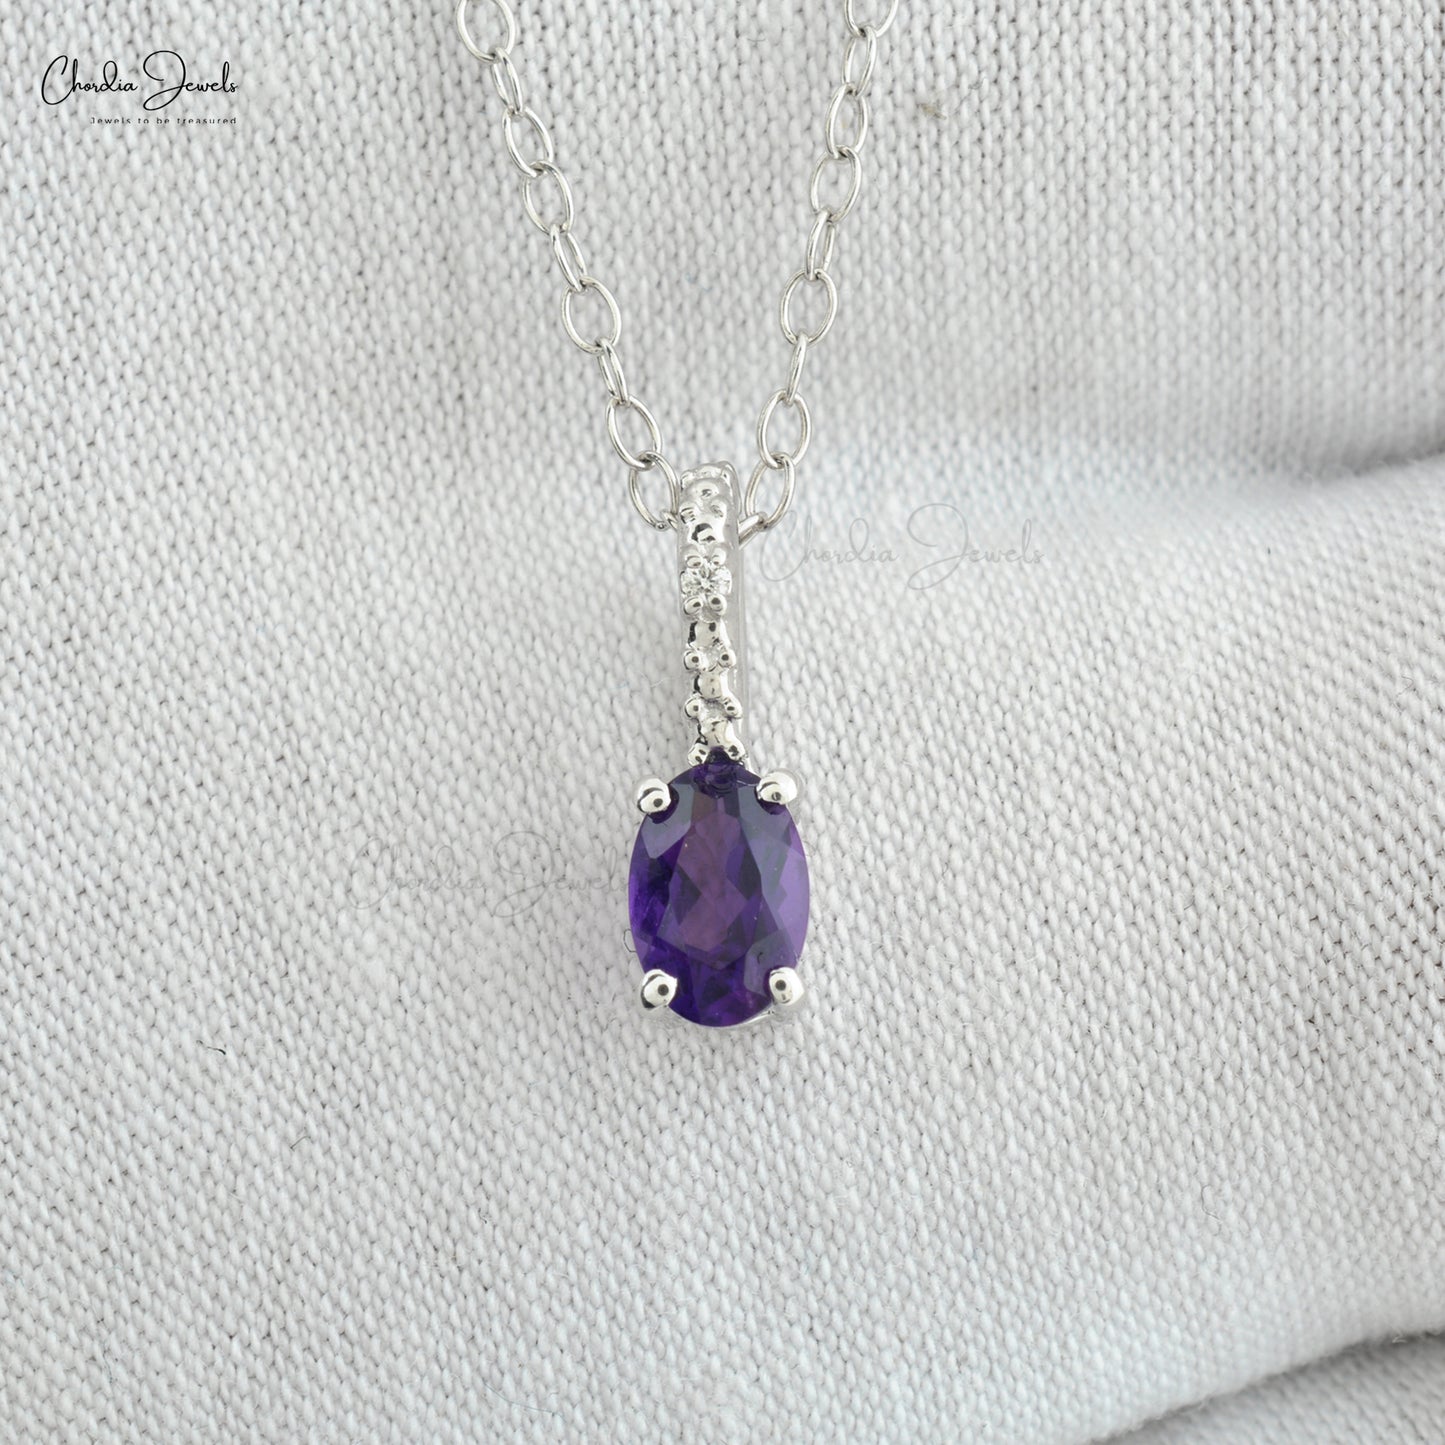 Oval Shaped Genuine Purple Amethyst Hidden Bail Pendant Necklace 14k Real White Gold Diamond Jewelry Wedding Gift